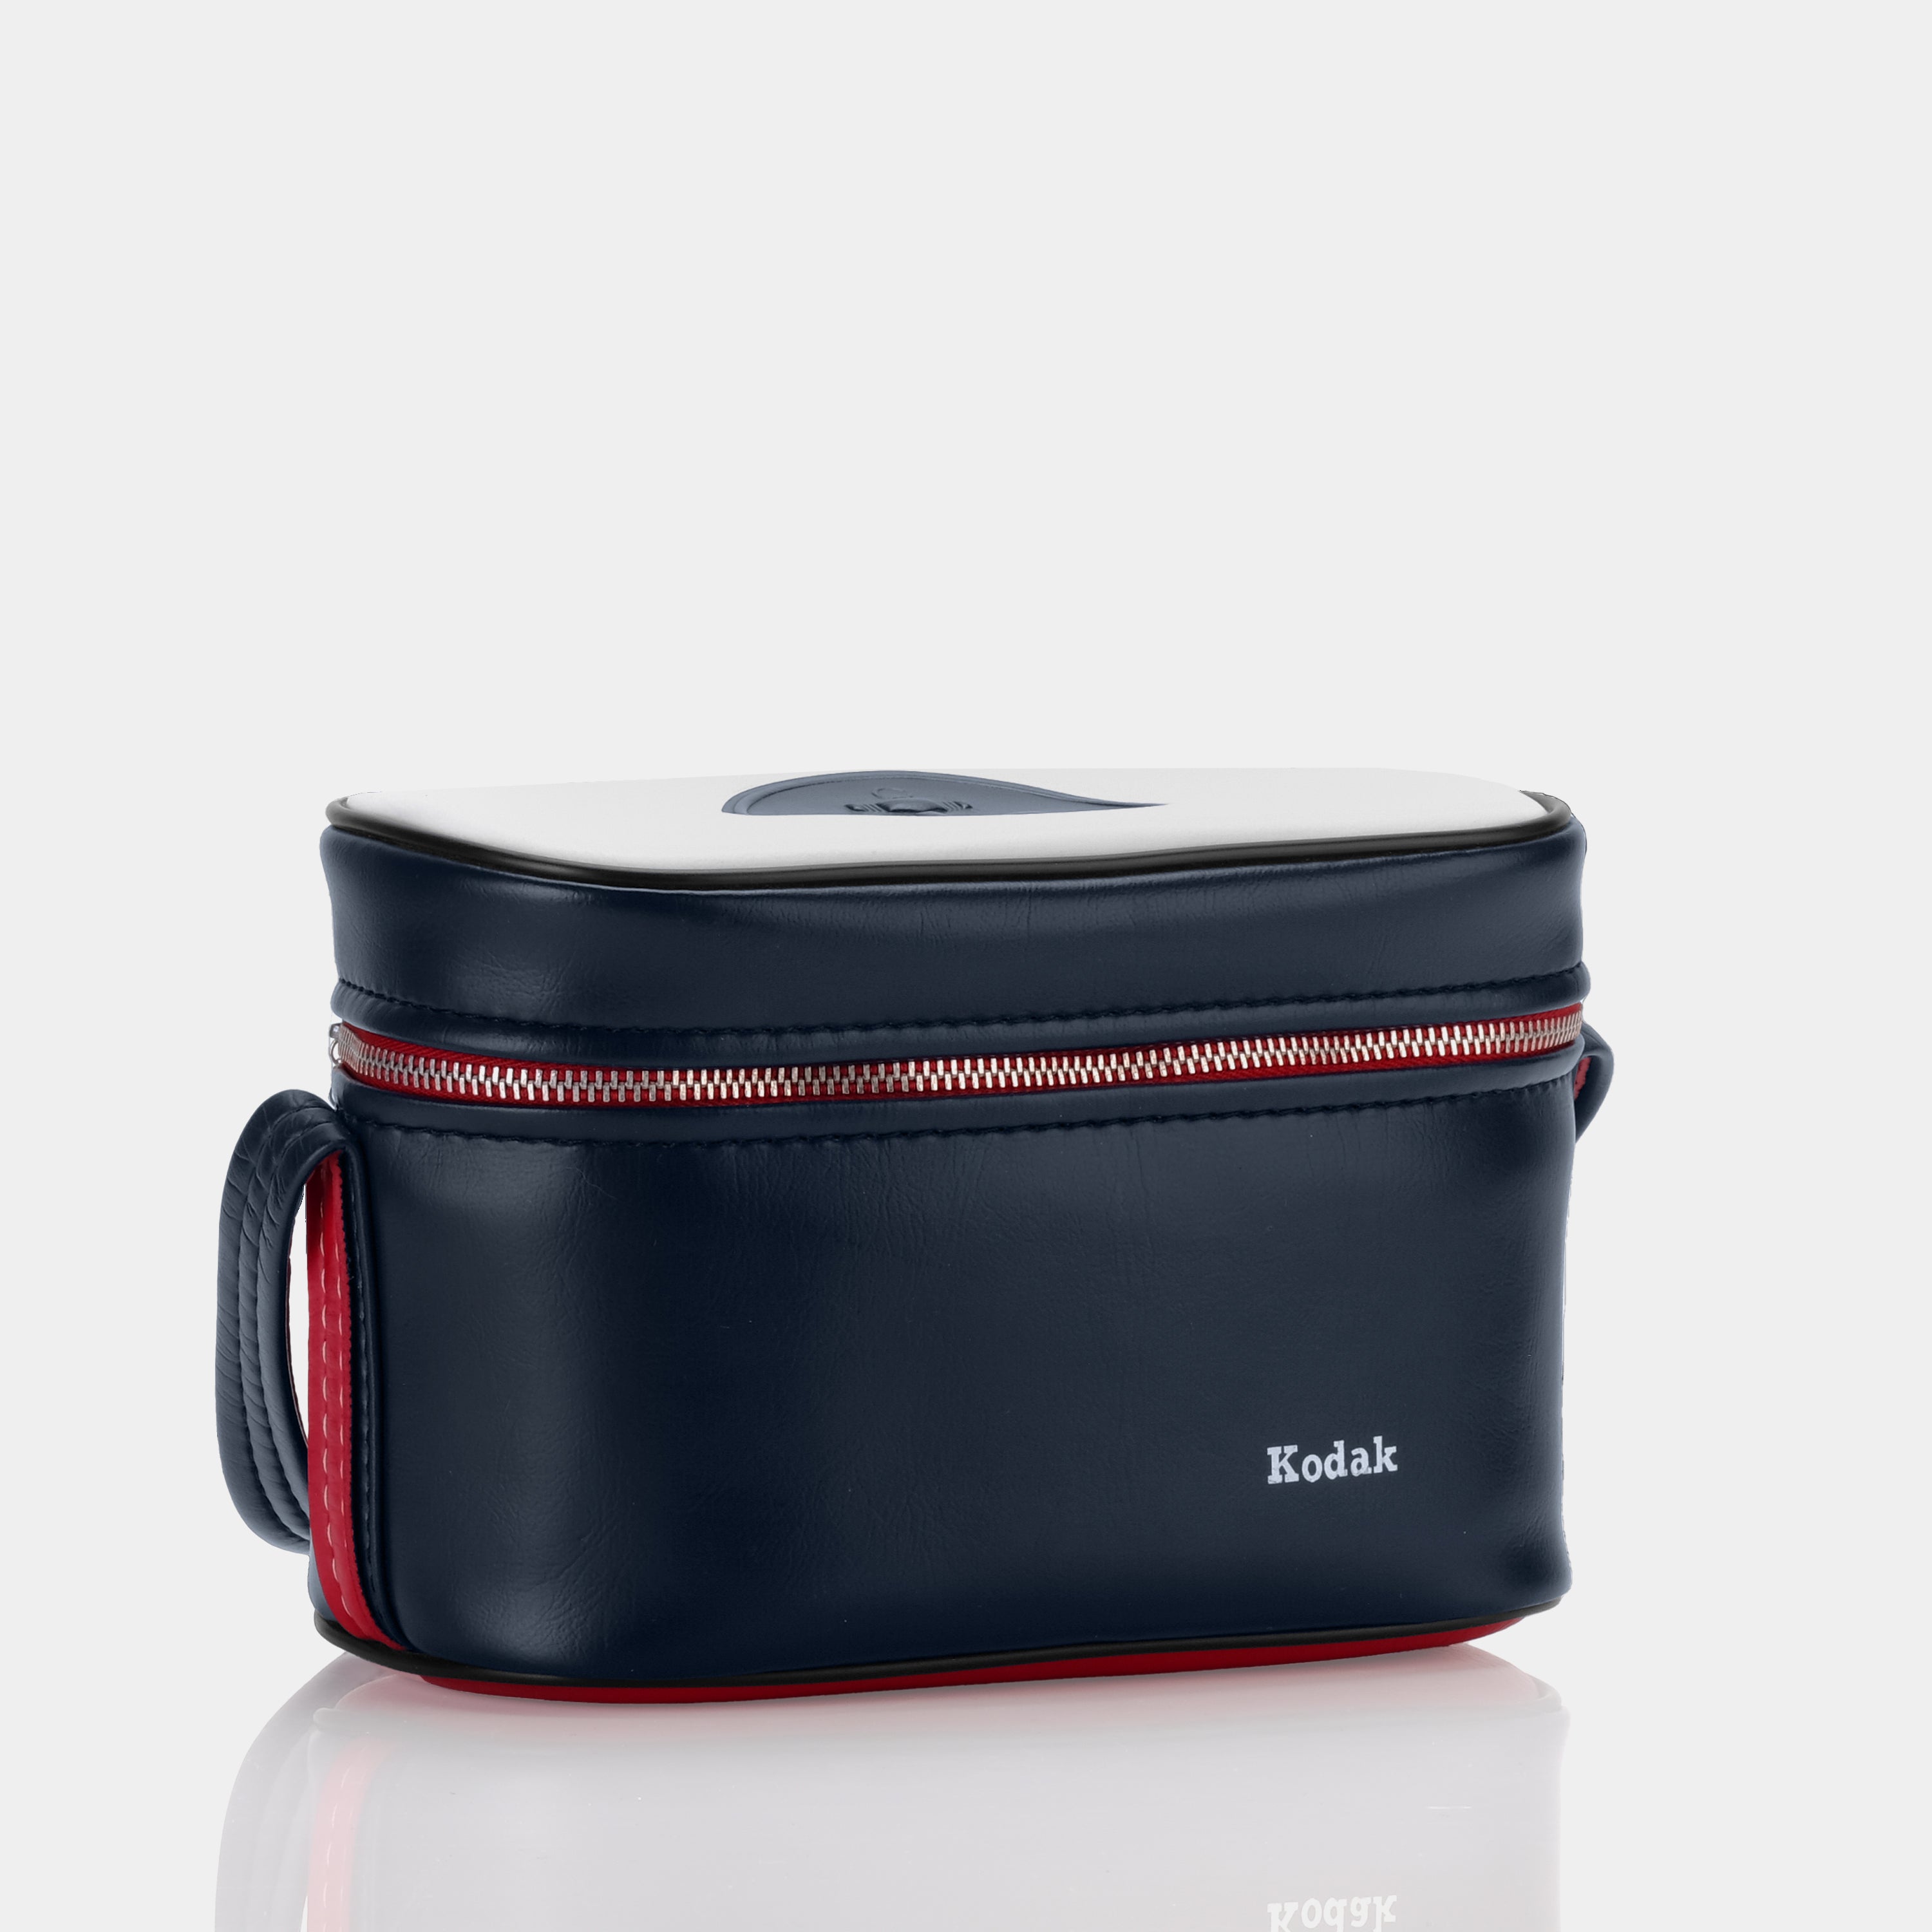 Kodak Red, White and Blue 35mm Camera Case